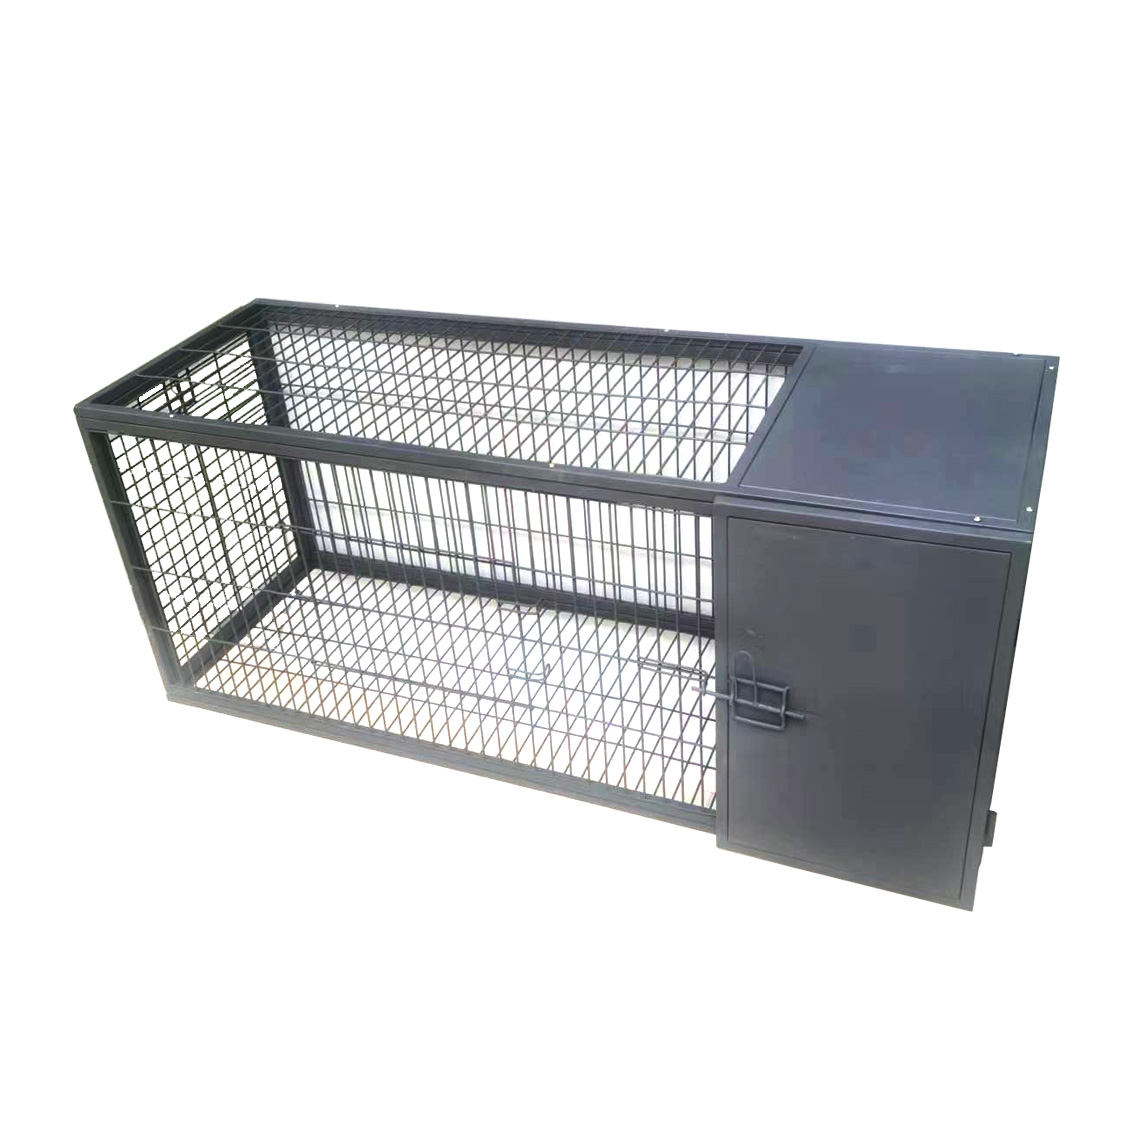 Black powder coated metal rabbit pet cage Featured Image